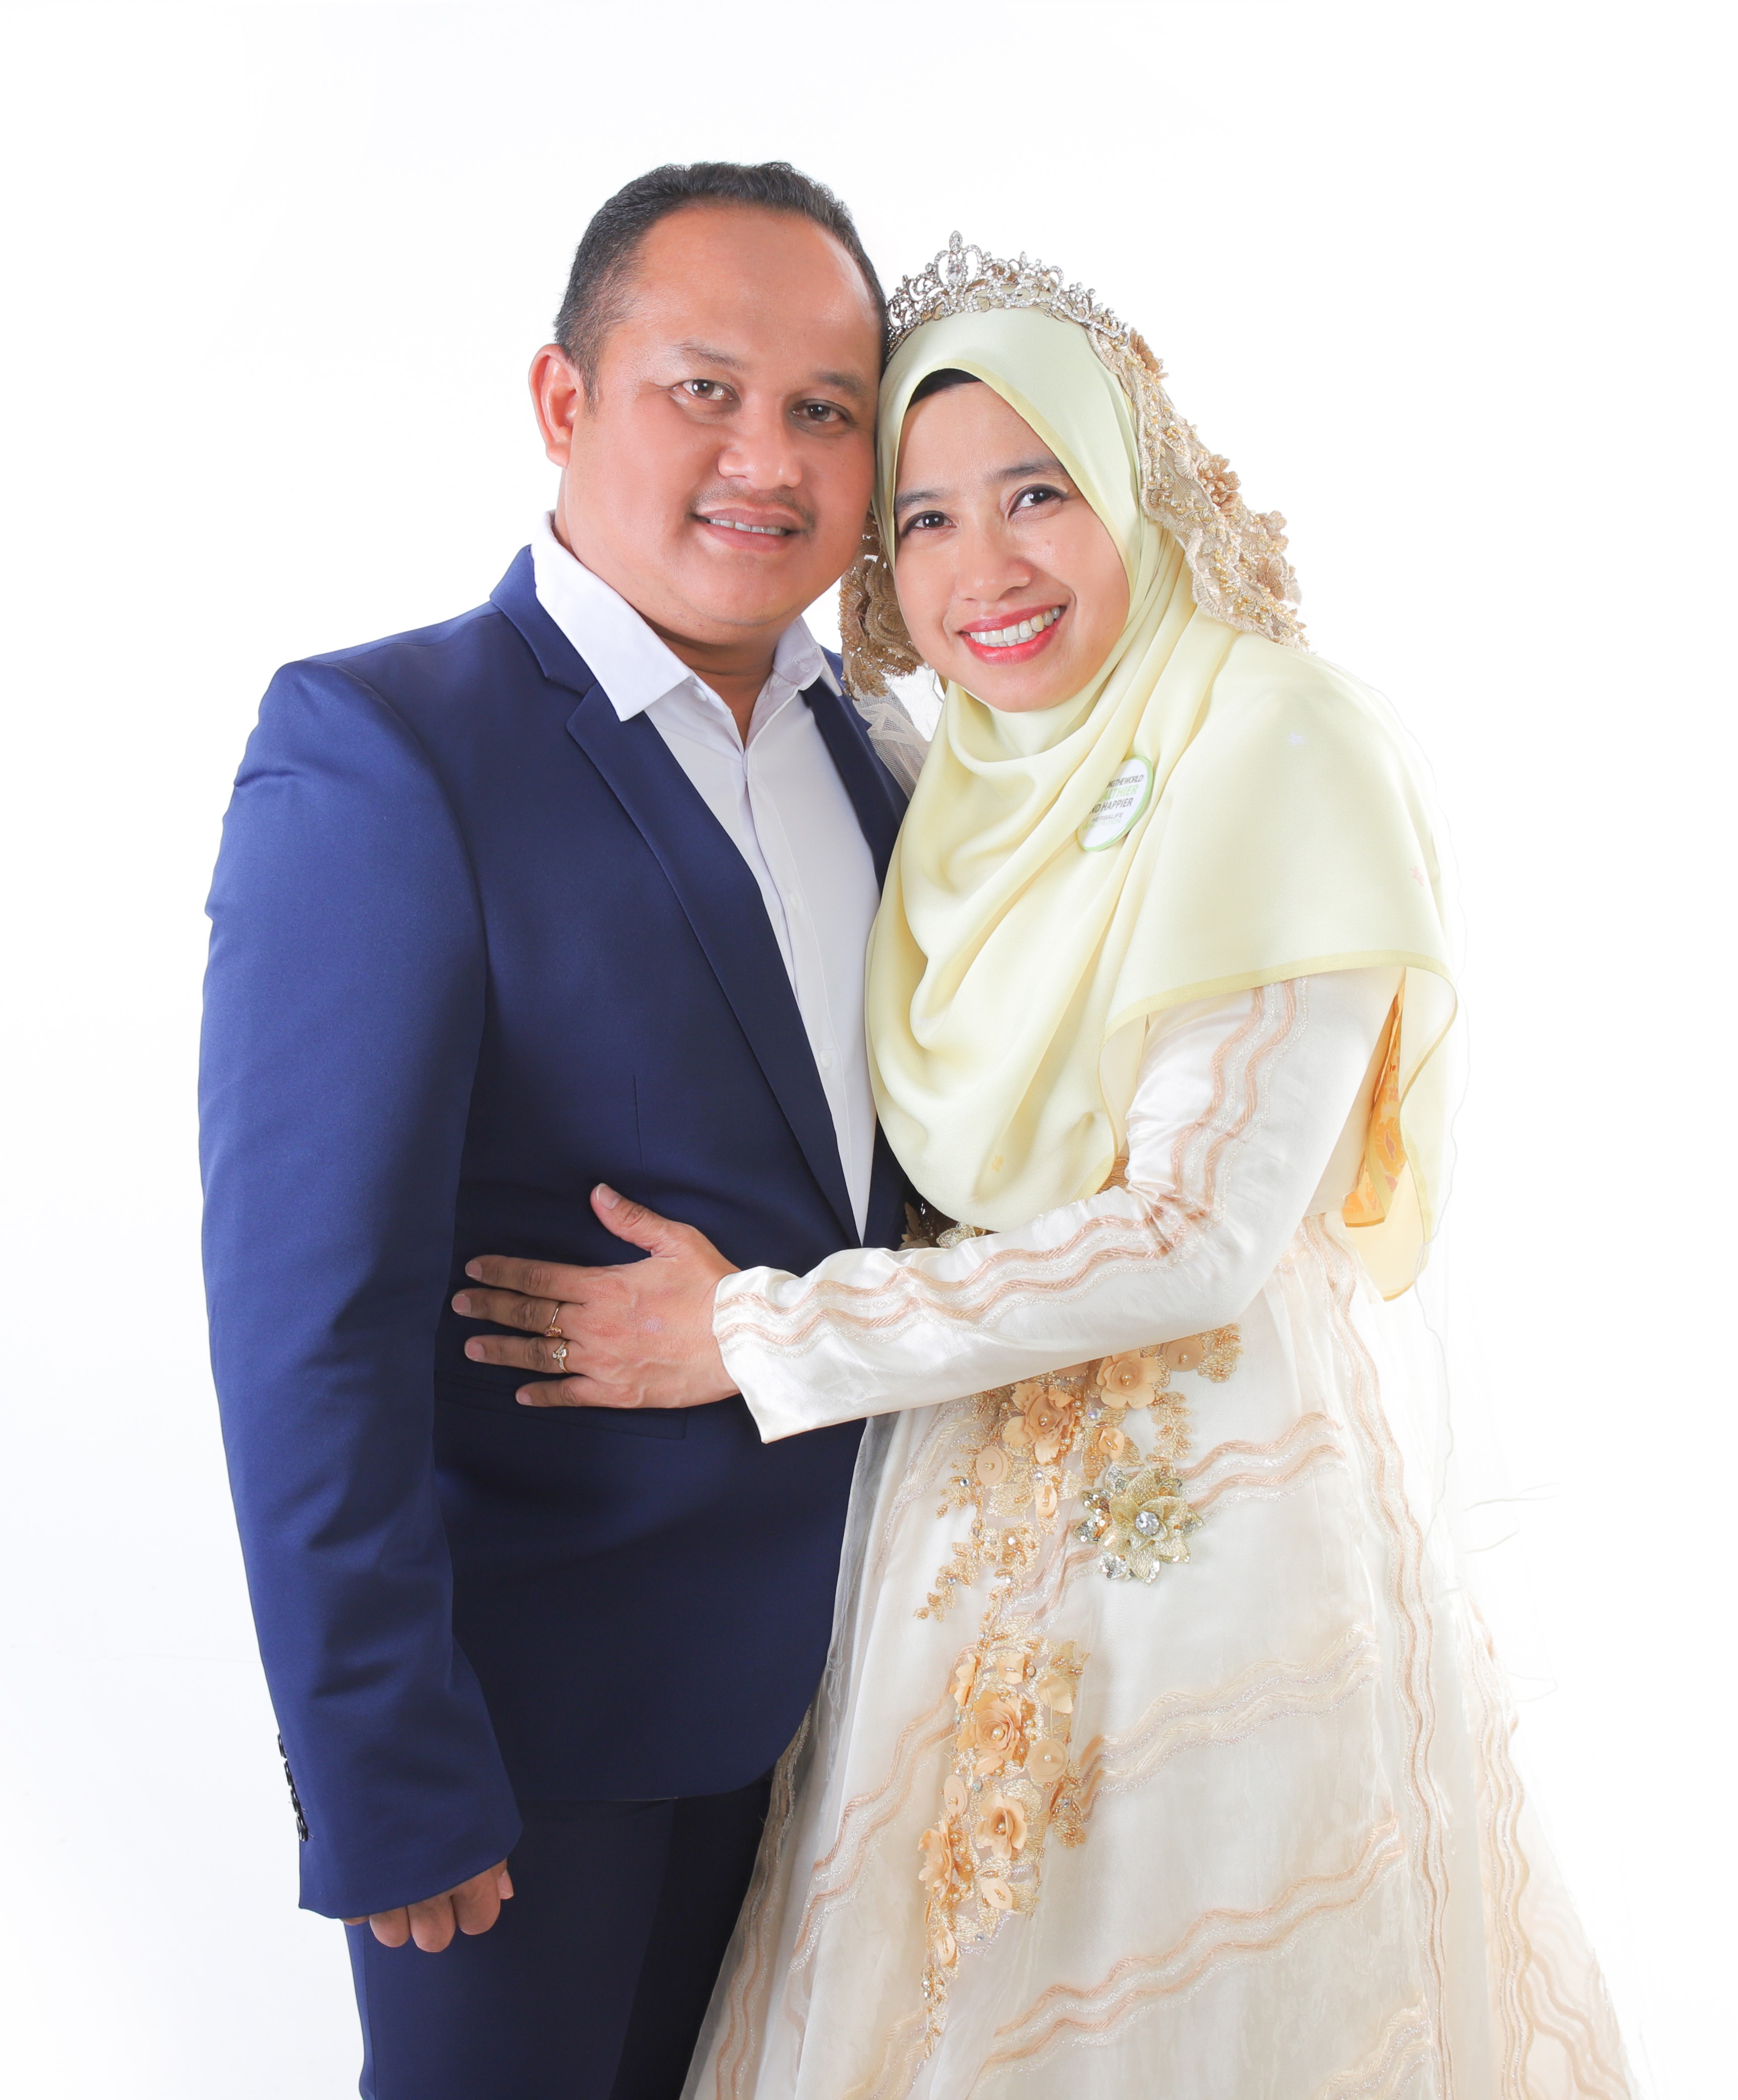 Norsuhana and Mohd Yusof Headshot